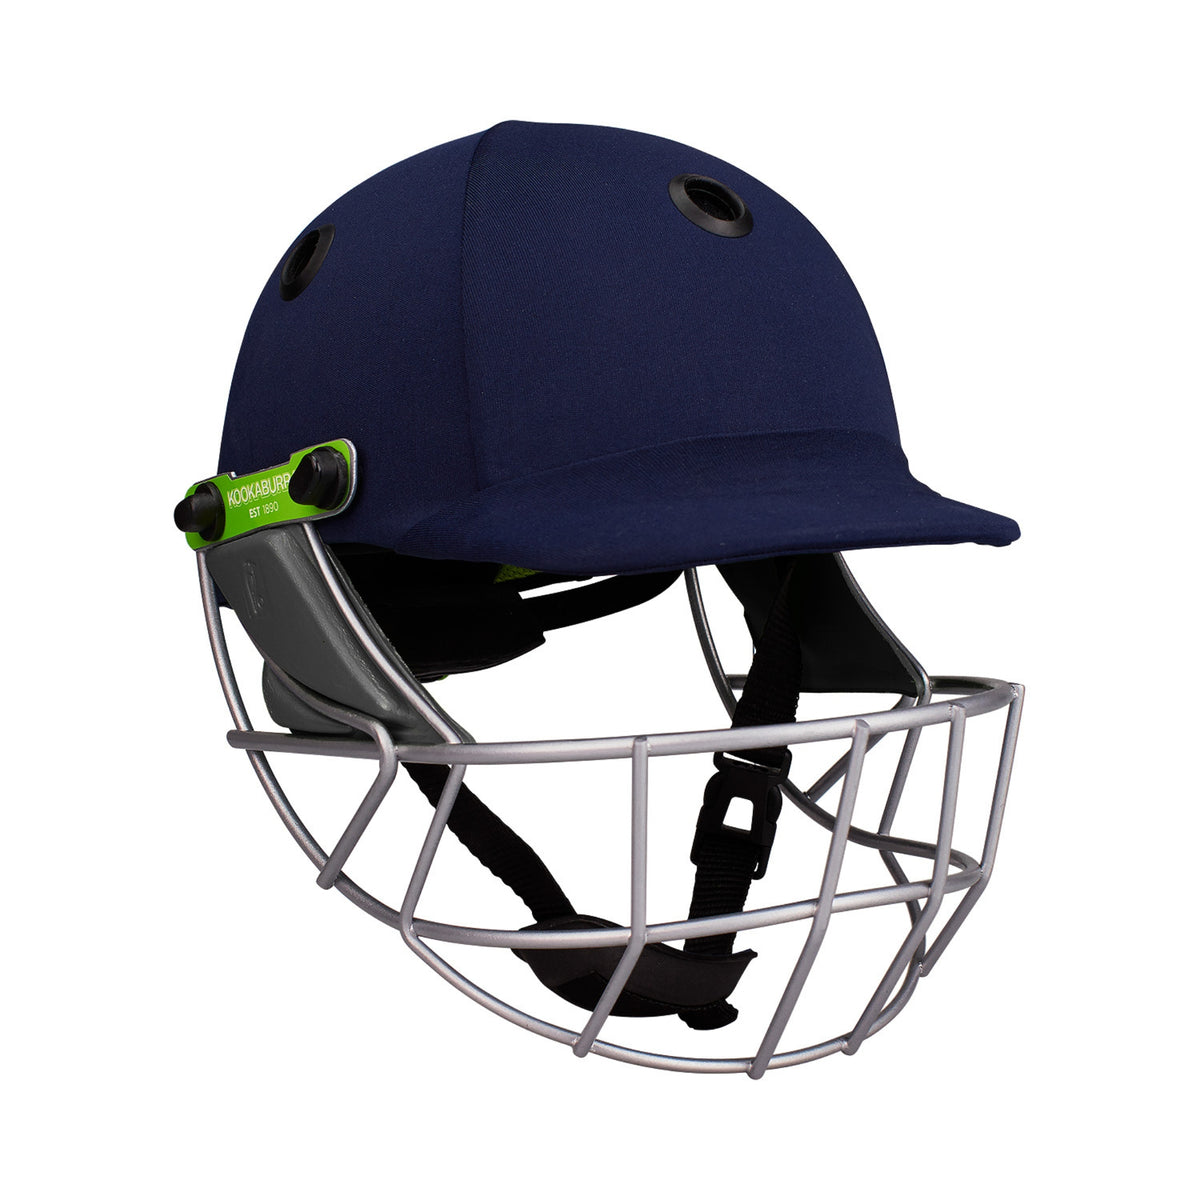 Kookaburra Pro 600f Cricket Helmet: Navy